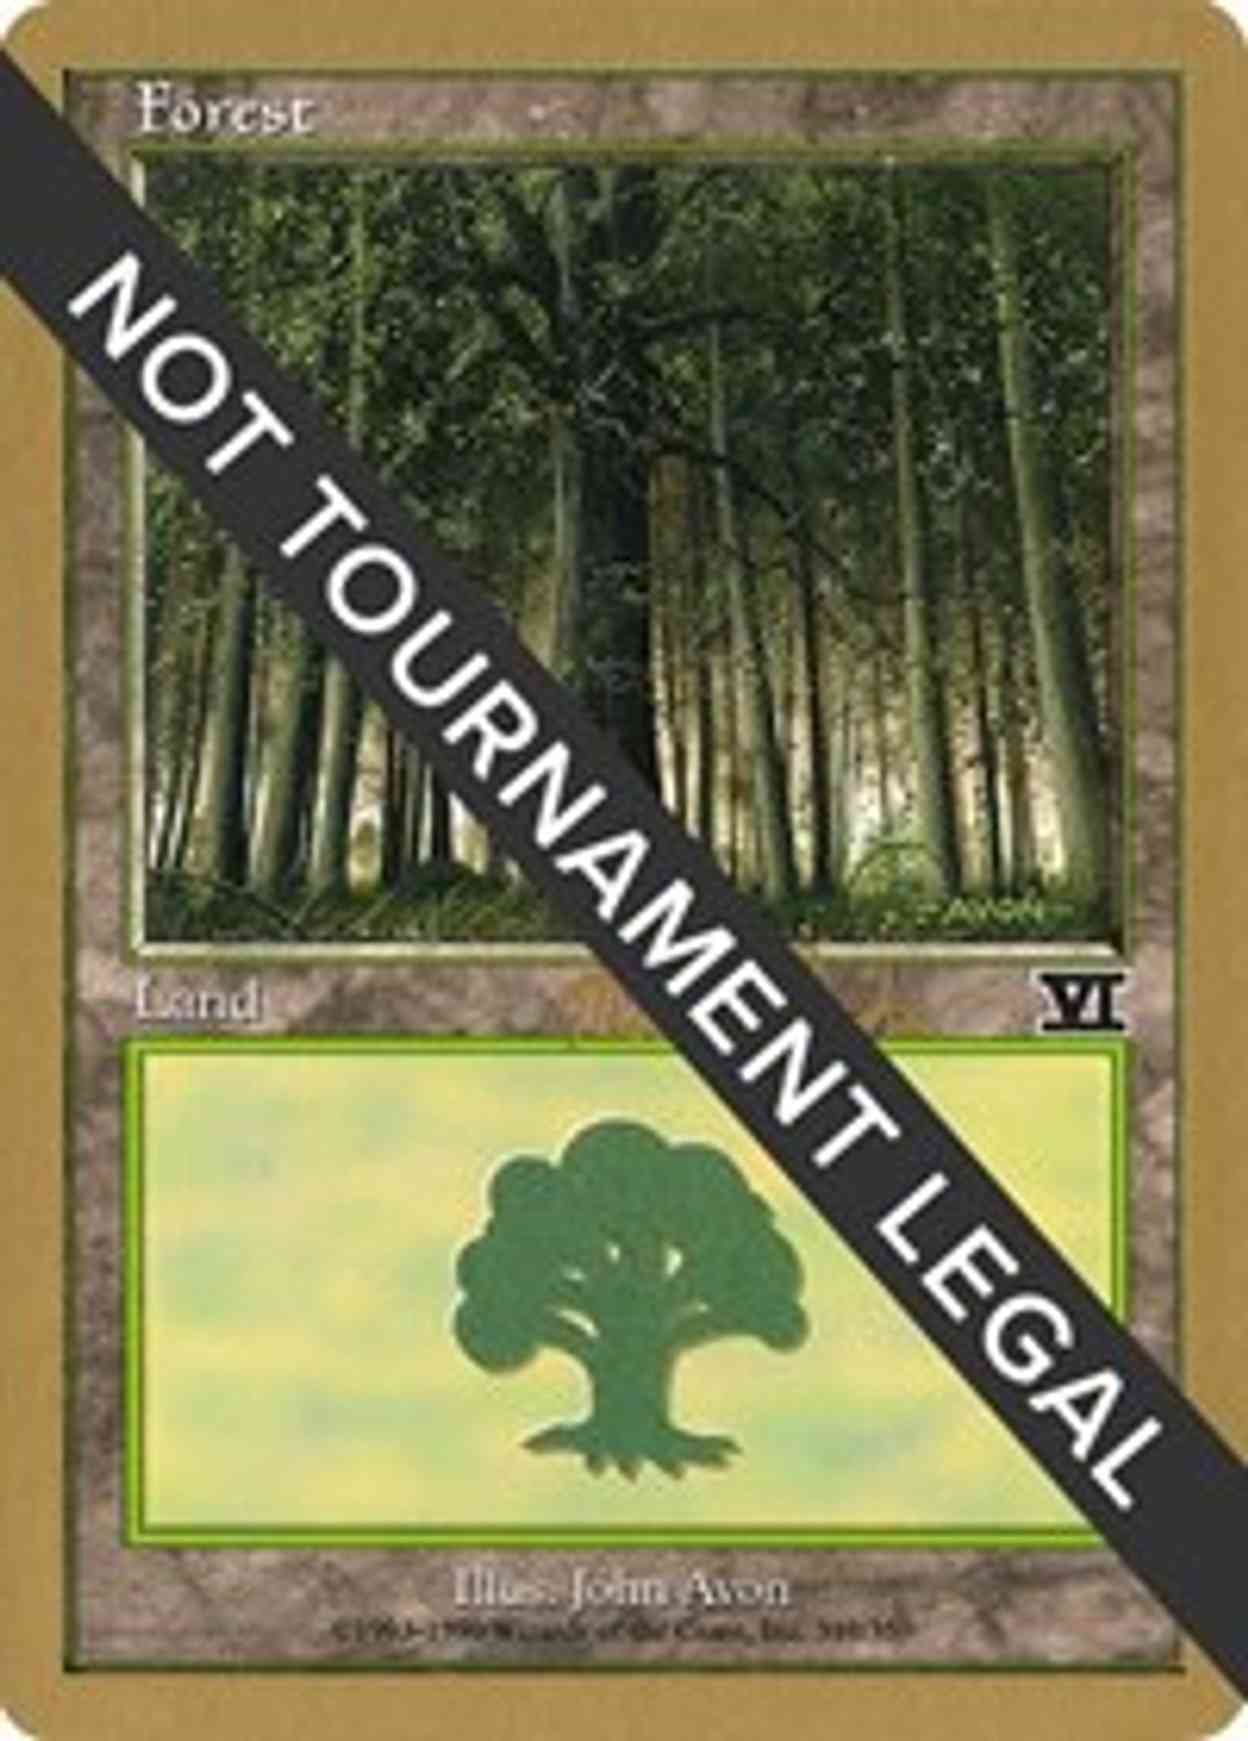 Forest (349) - 1999 Matt Linde (6ED) magic card front